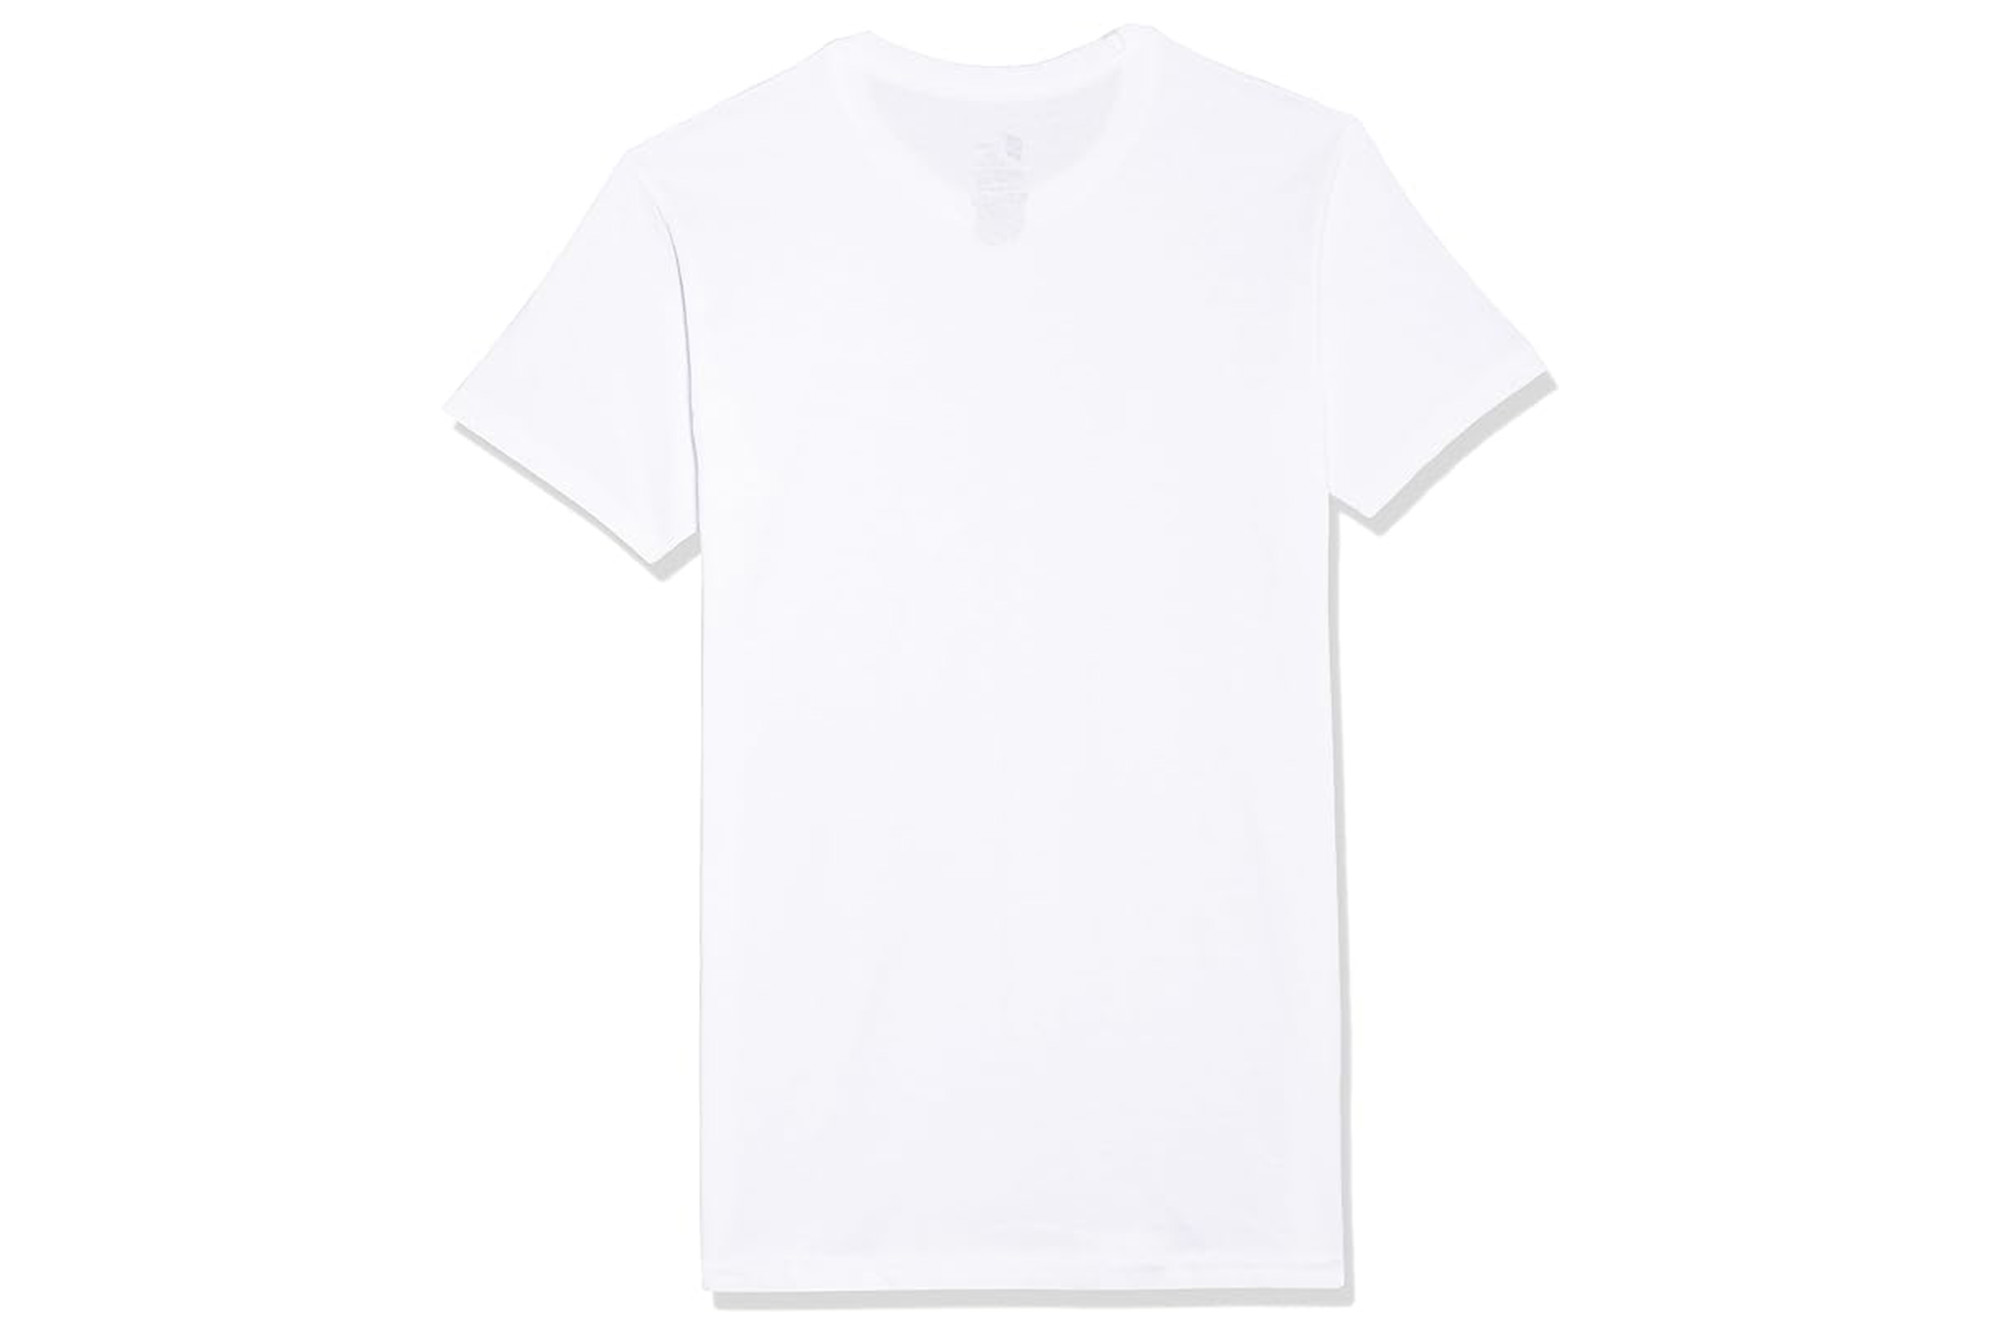 Hanes Men's Undershirts, Odor Control, Moisture-Wicking Tee Shirts, Multi-Packs
